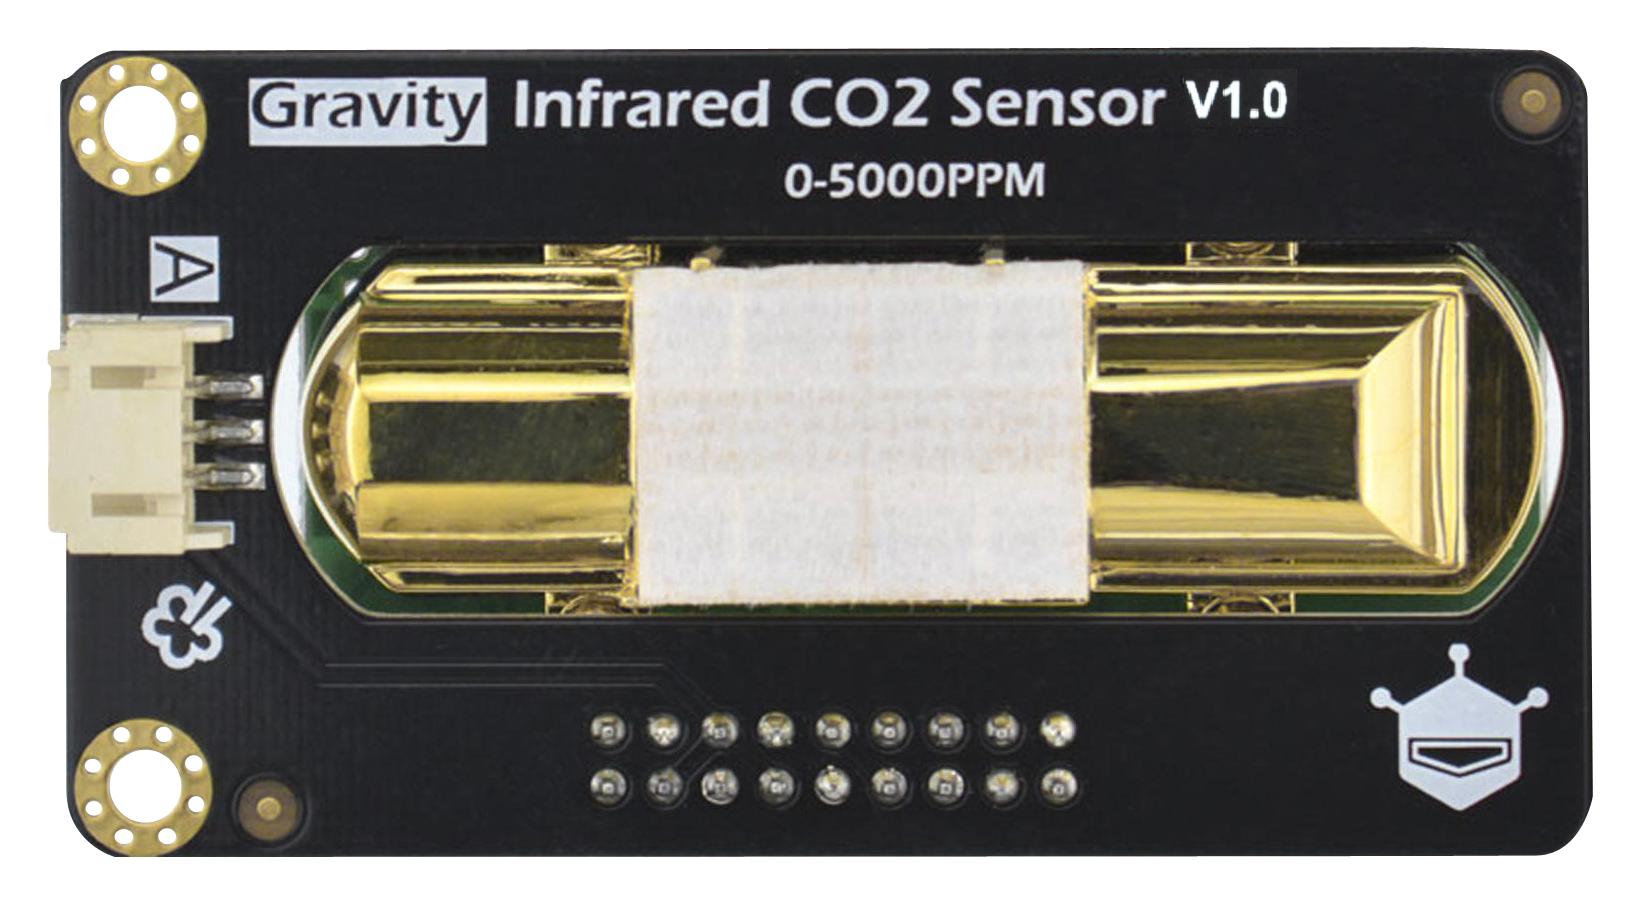 DFRobot Sen0219 Analogue Ir Co2 Sensor, Arduino Board